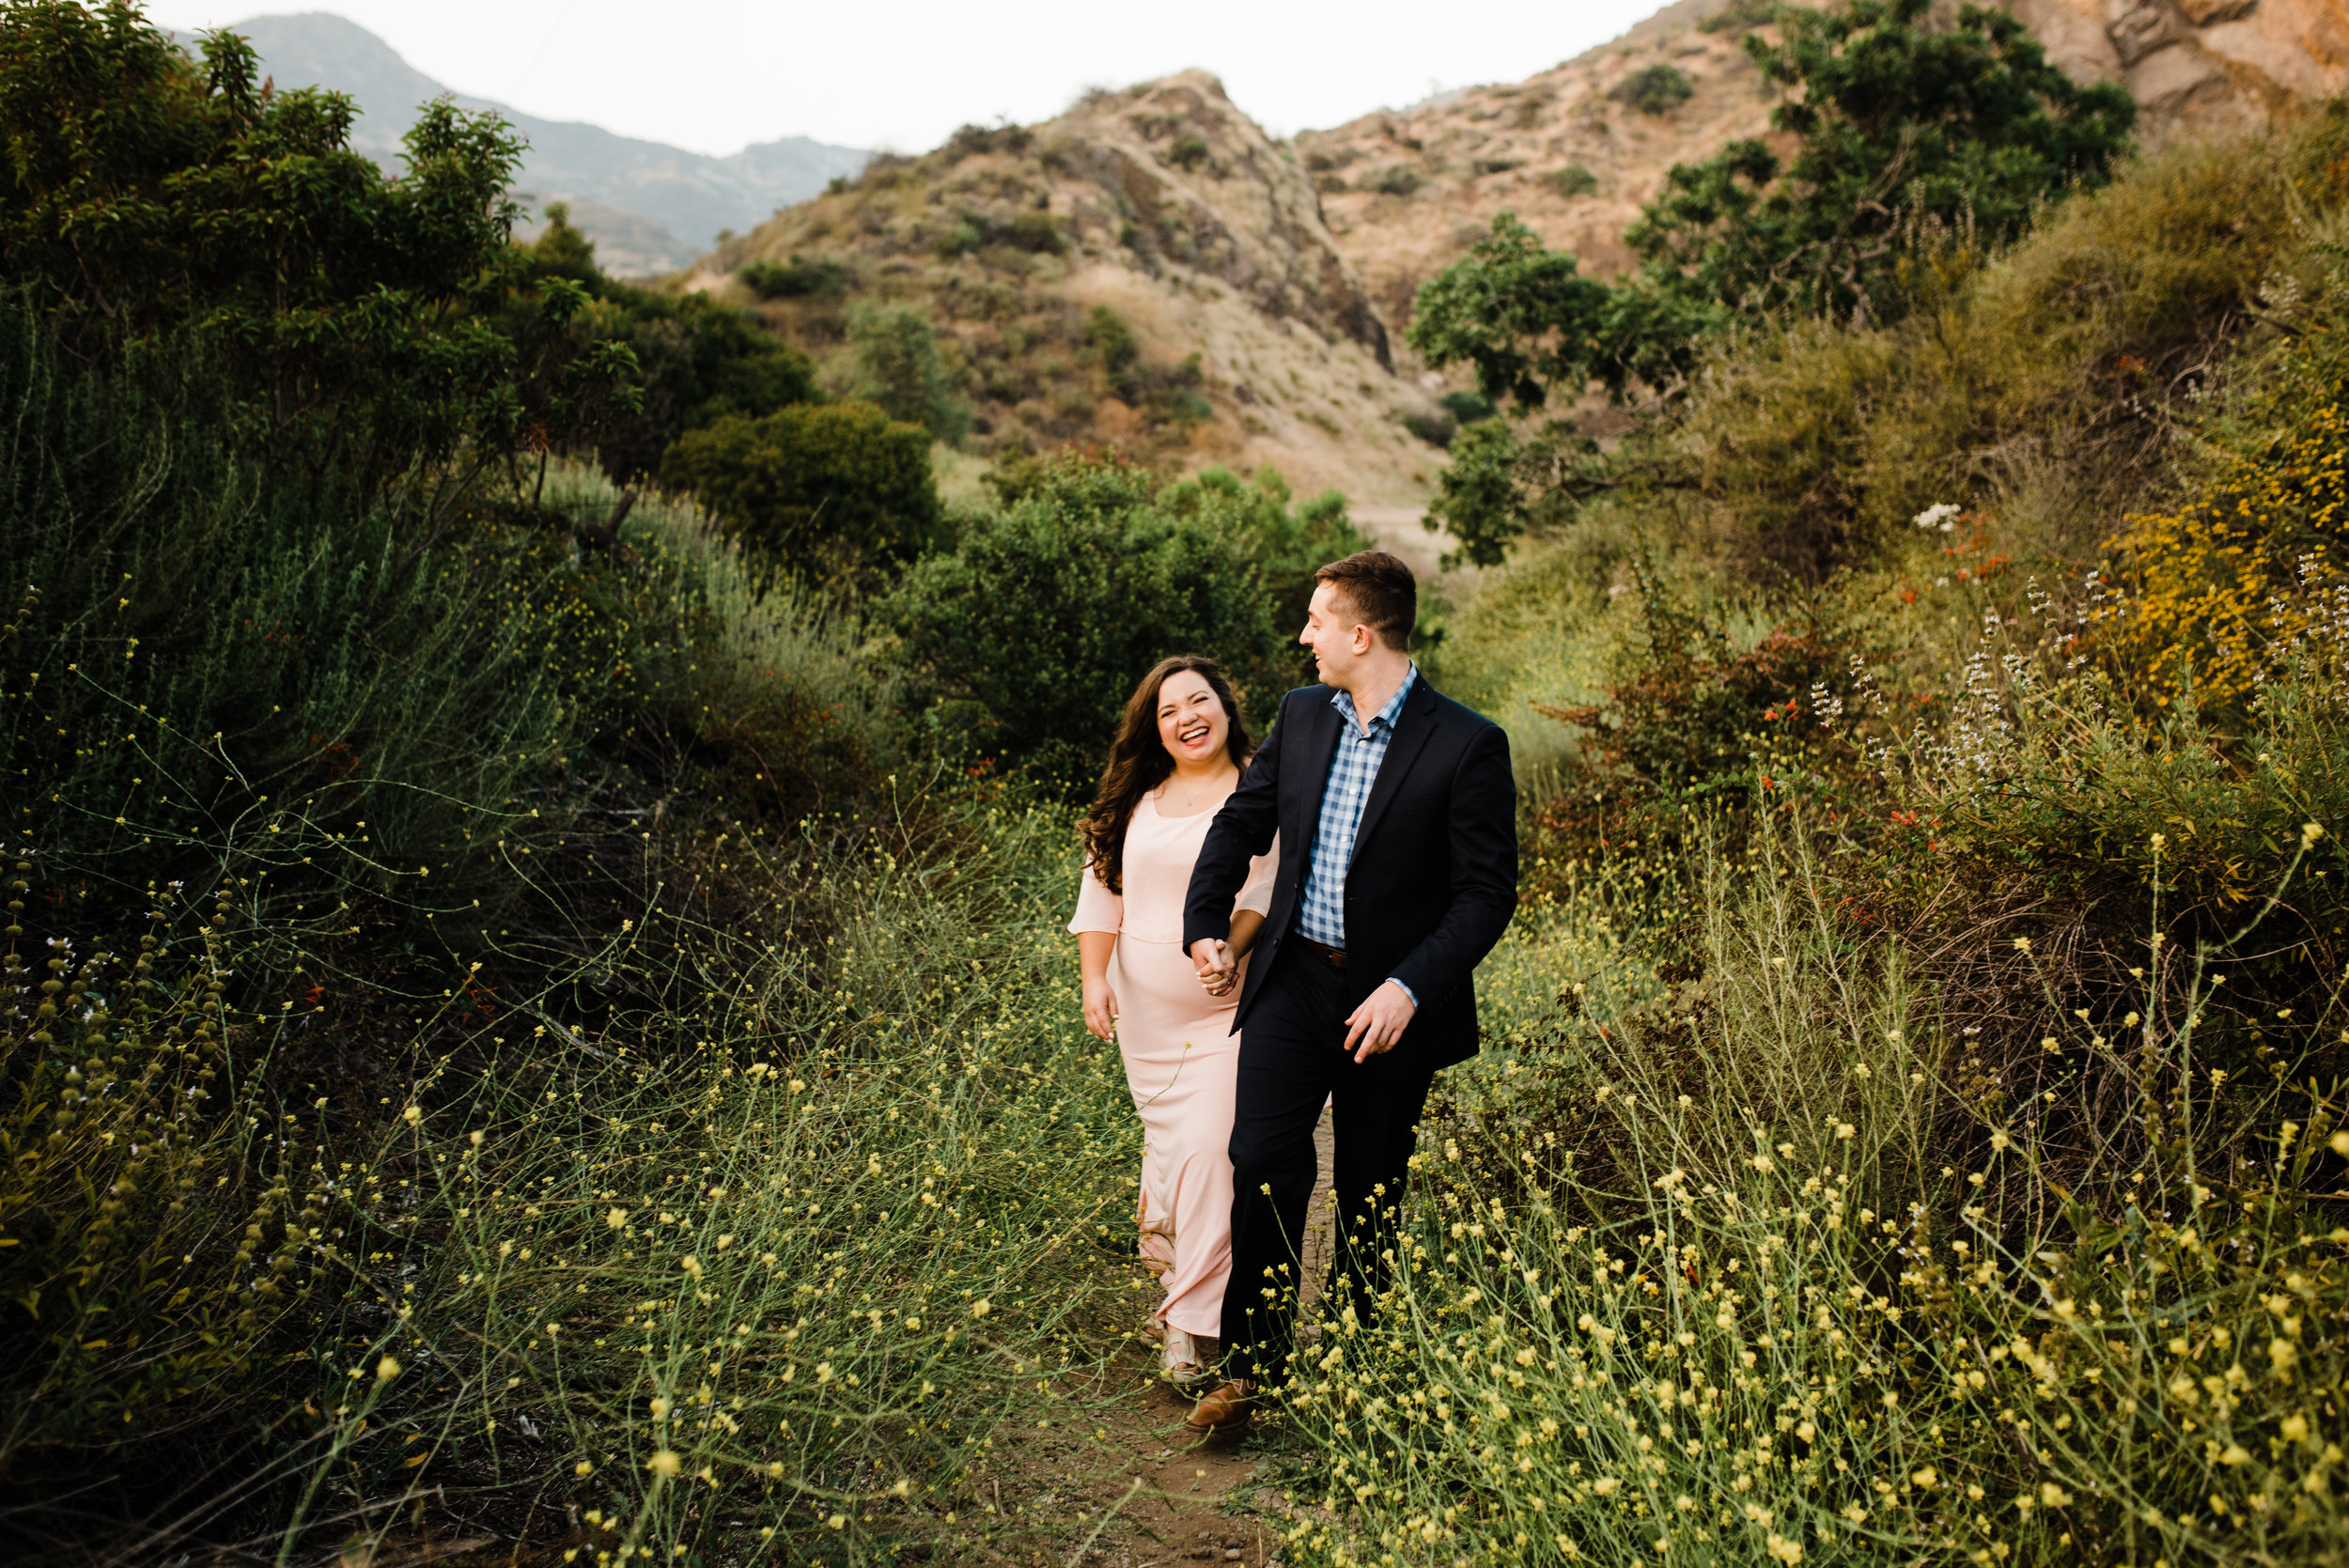 Adventuring through LA's Bronson Canyon, engaged couple walking together